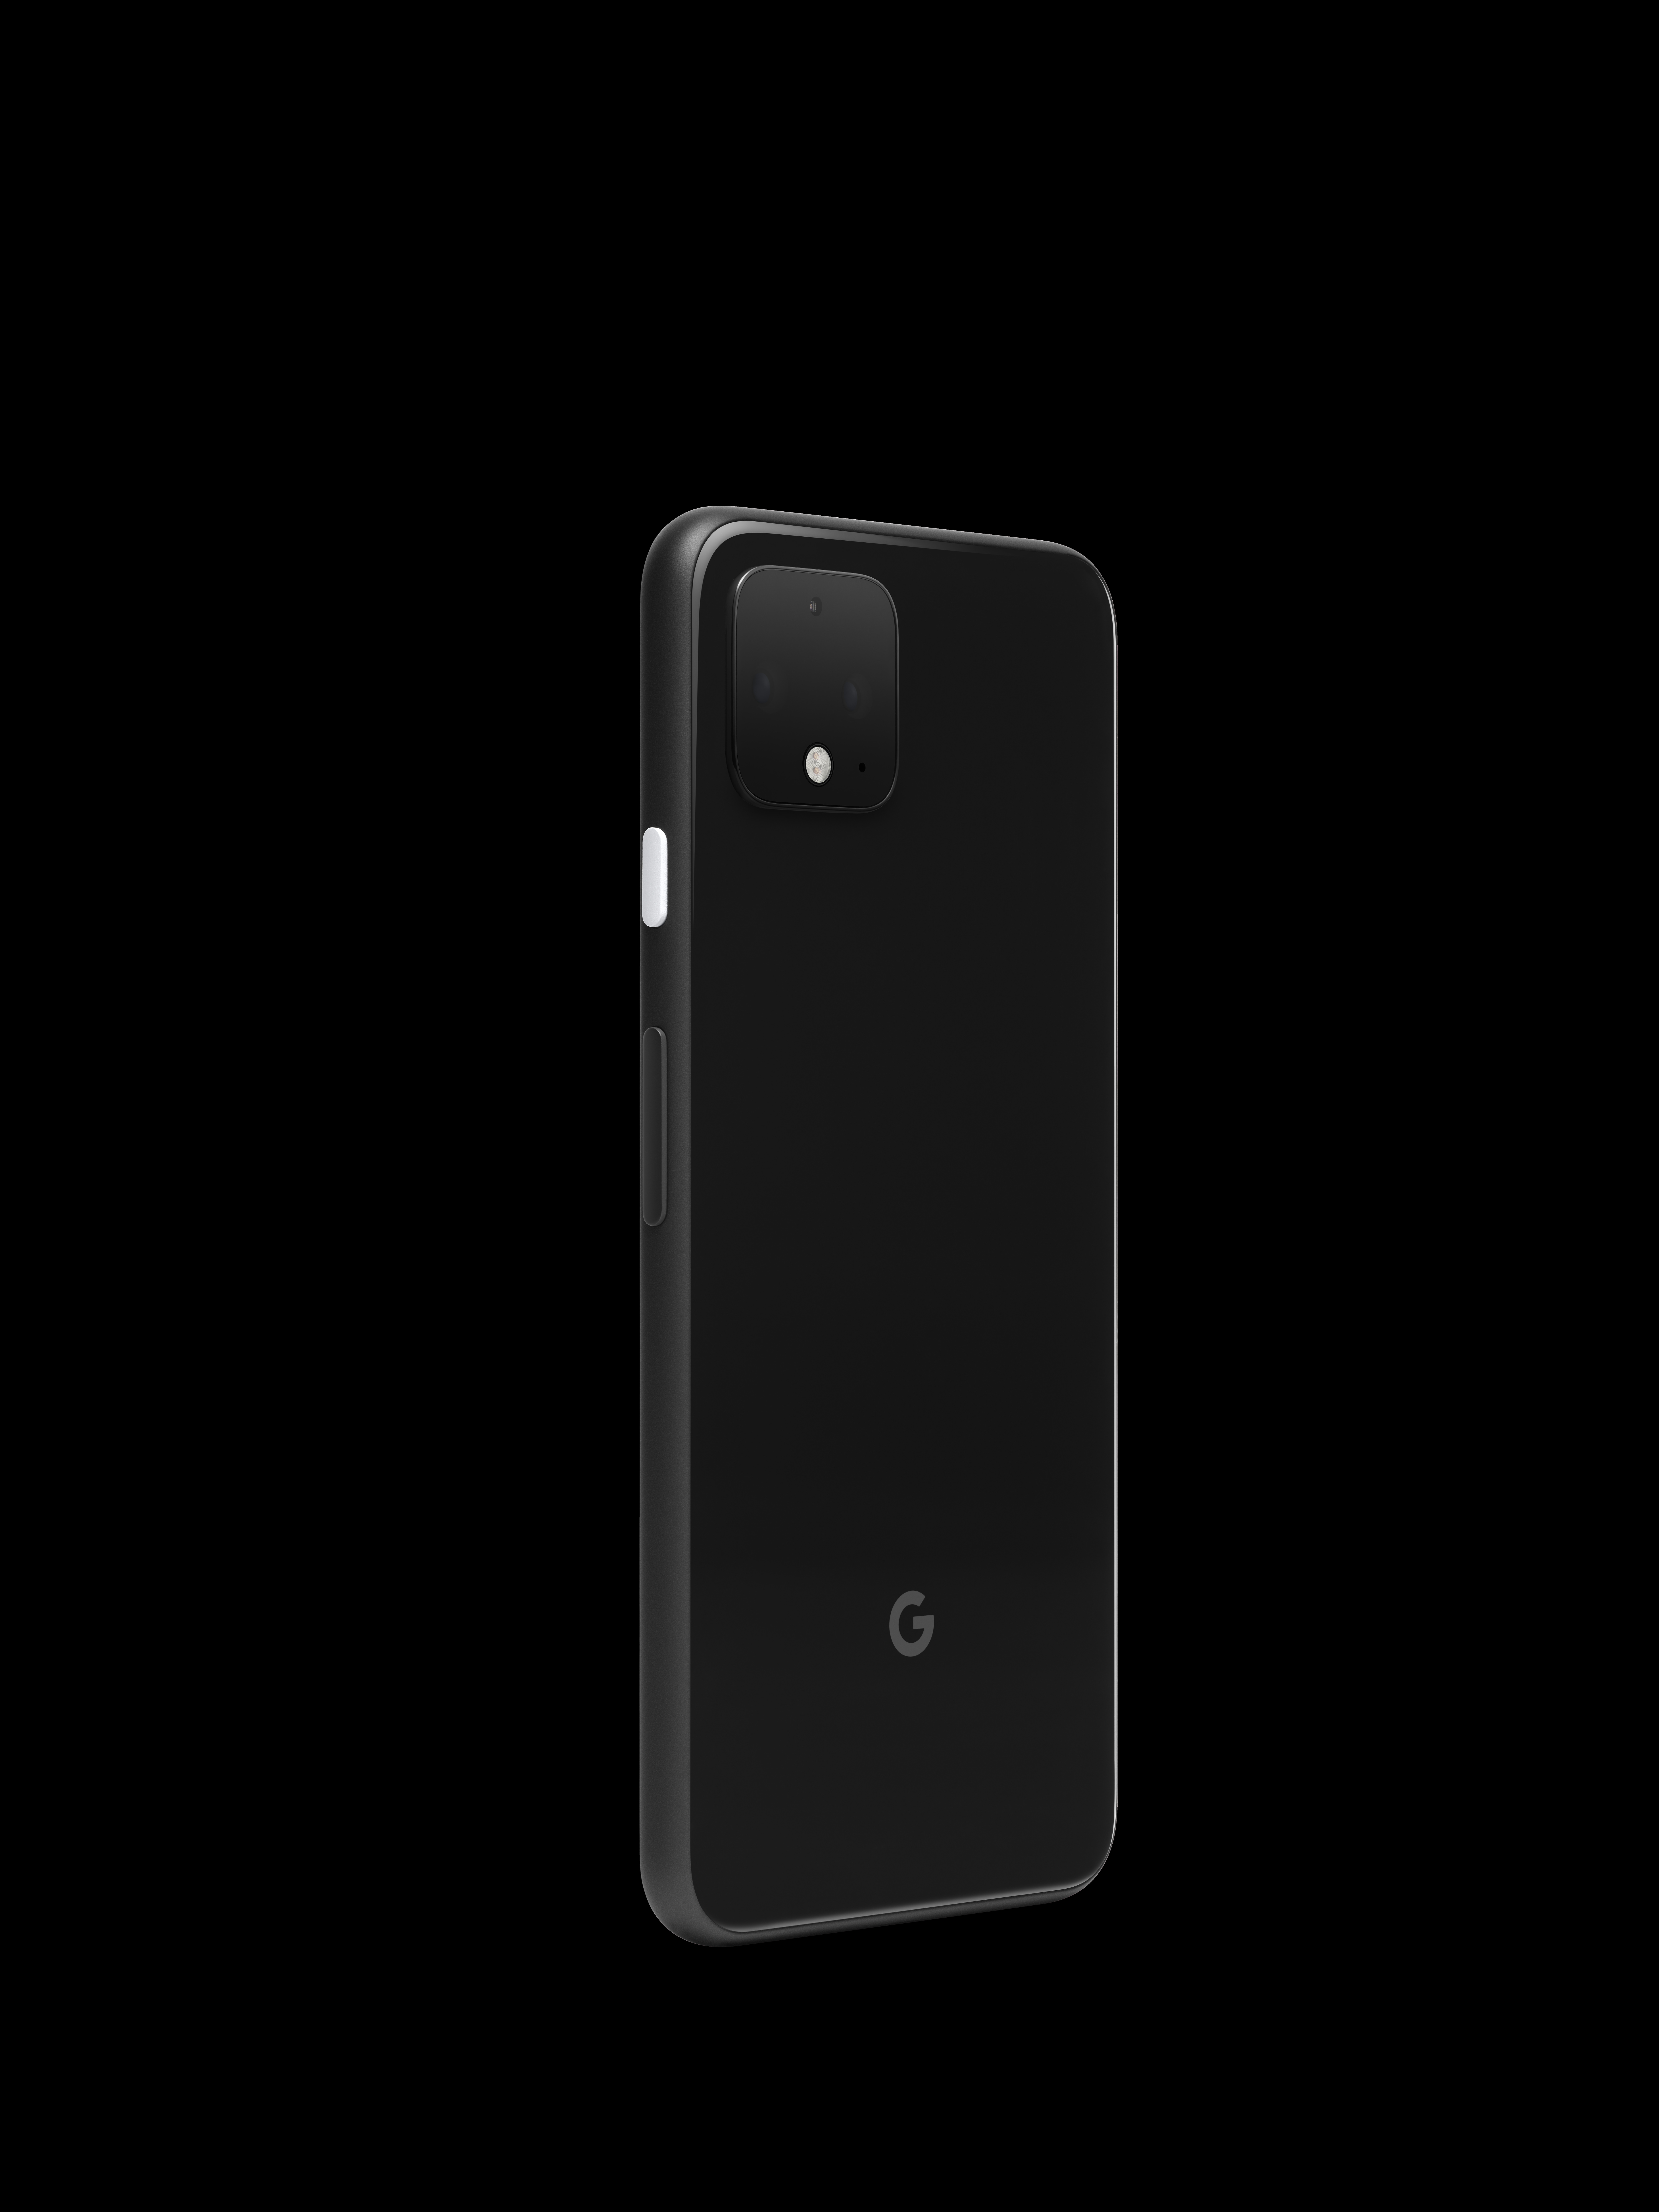 Google Pixel 4 Black 64 GB, Unlocked - image 3 of 5